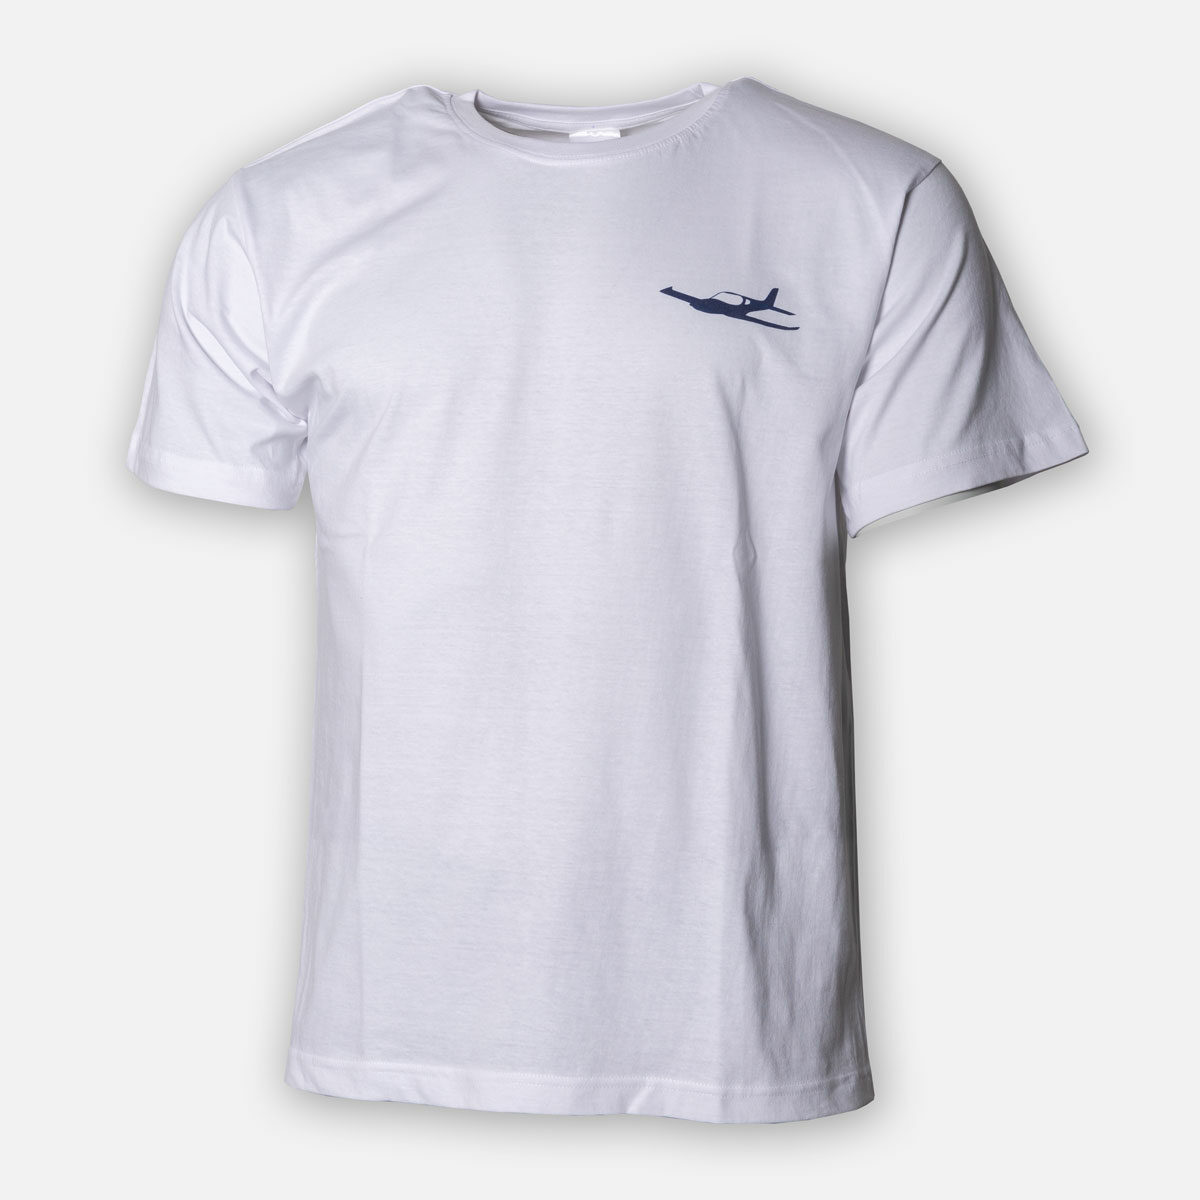 BRISTELL T-shirt with aeroplane white